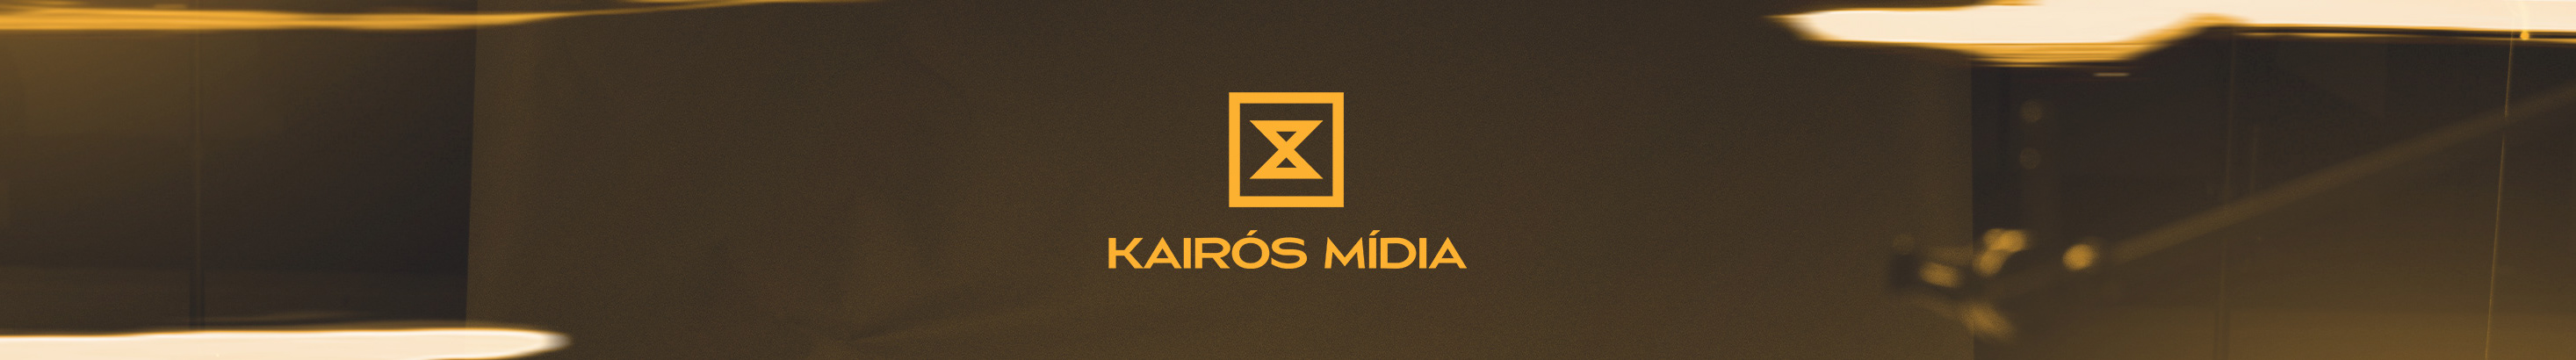 KAIRÓS MÍDIA's profile banner